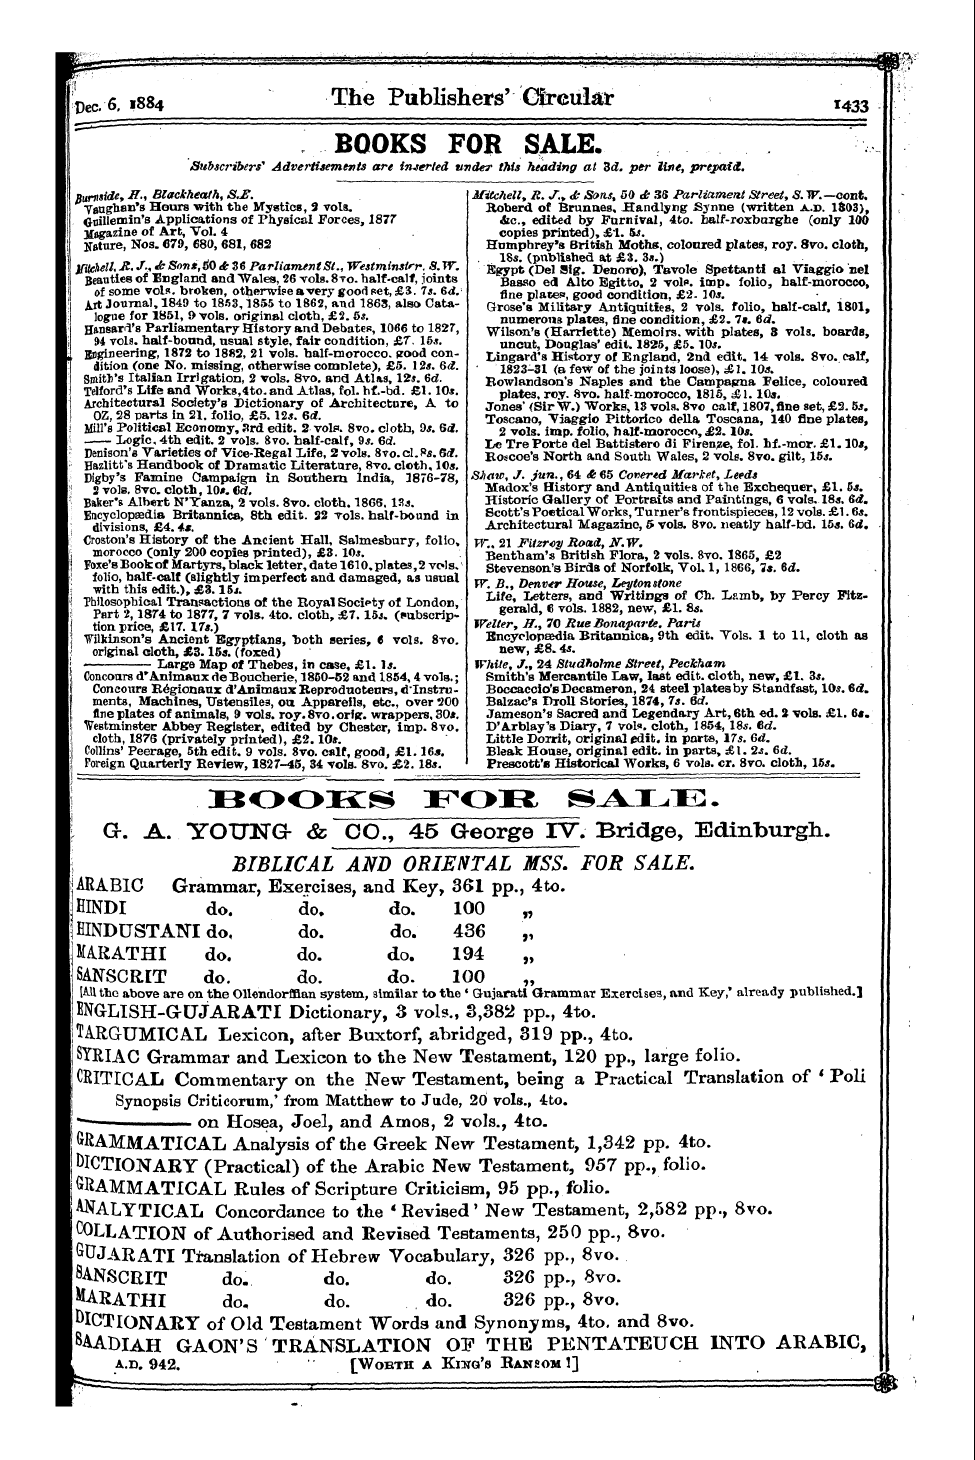 Publishers’ Circular (1880-1890): jS F Y, 1st edition - I Ibookj*; For ^Jkjejel.